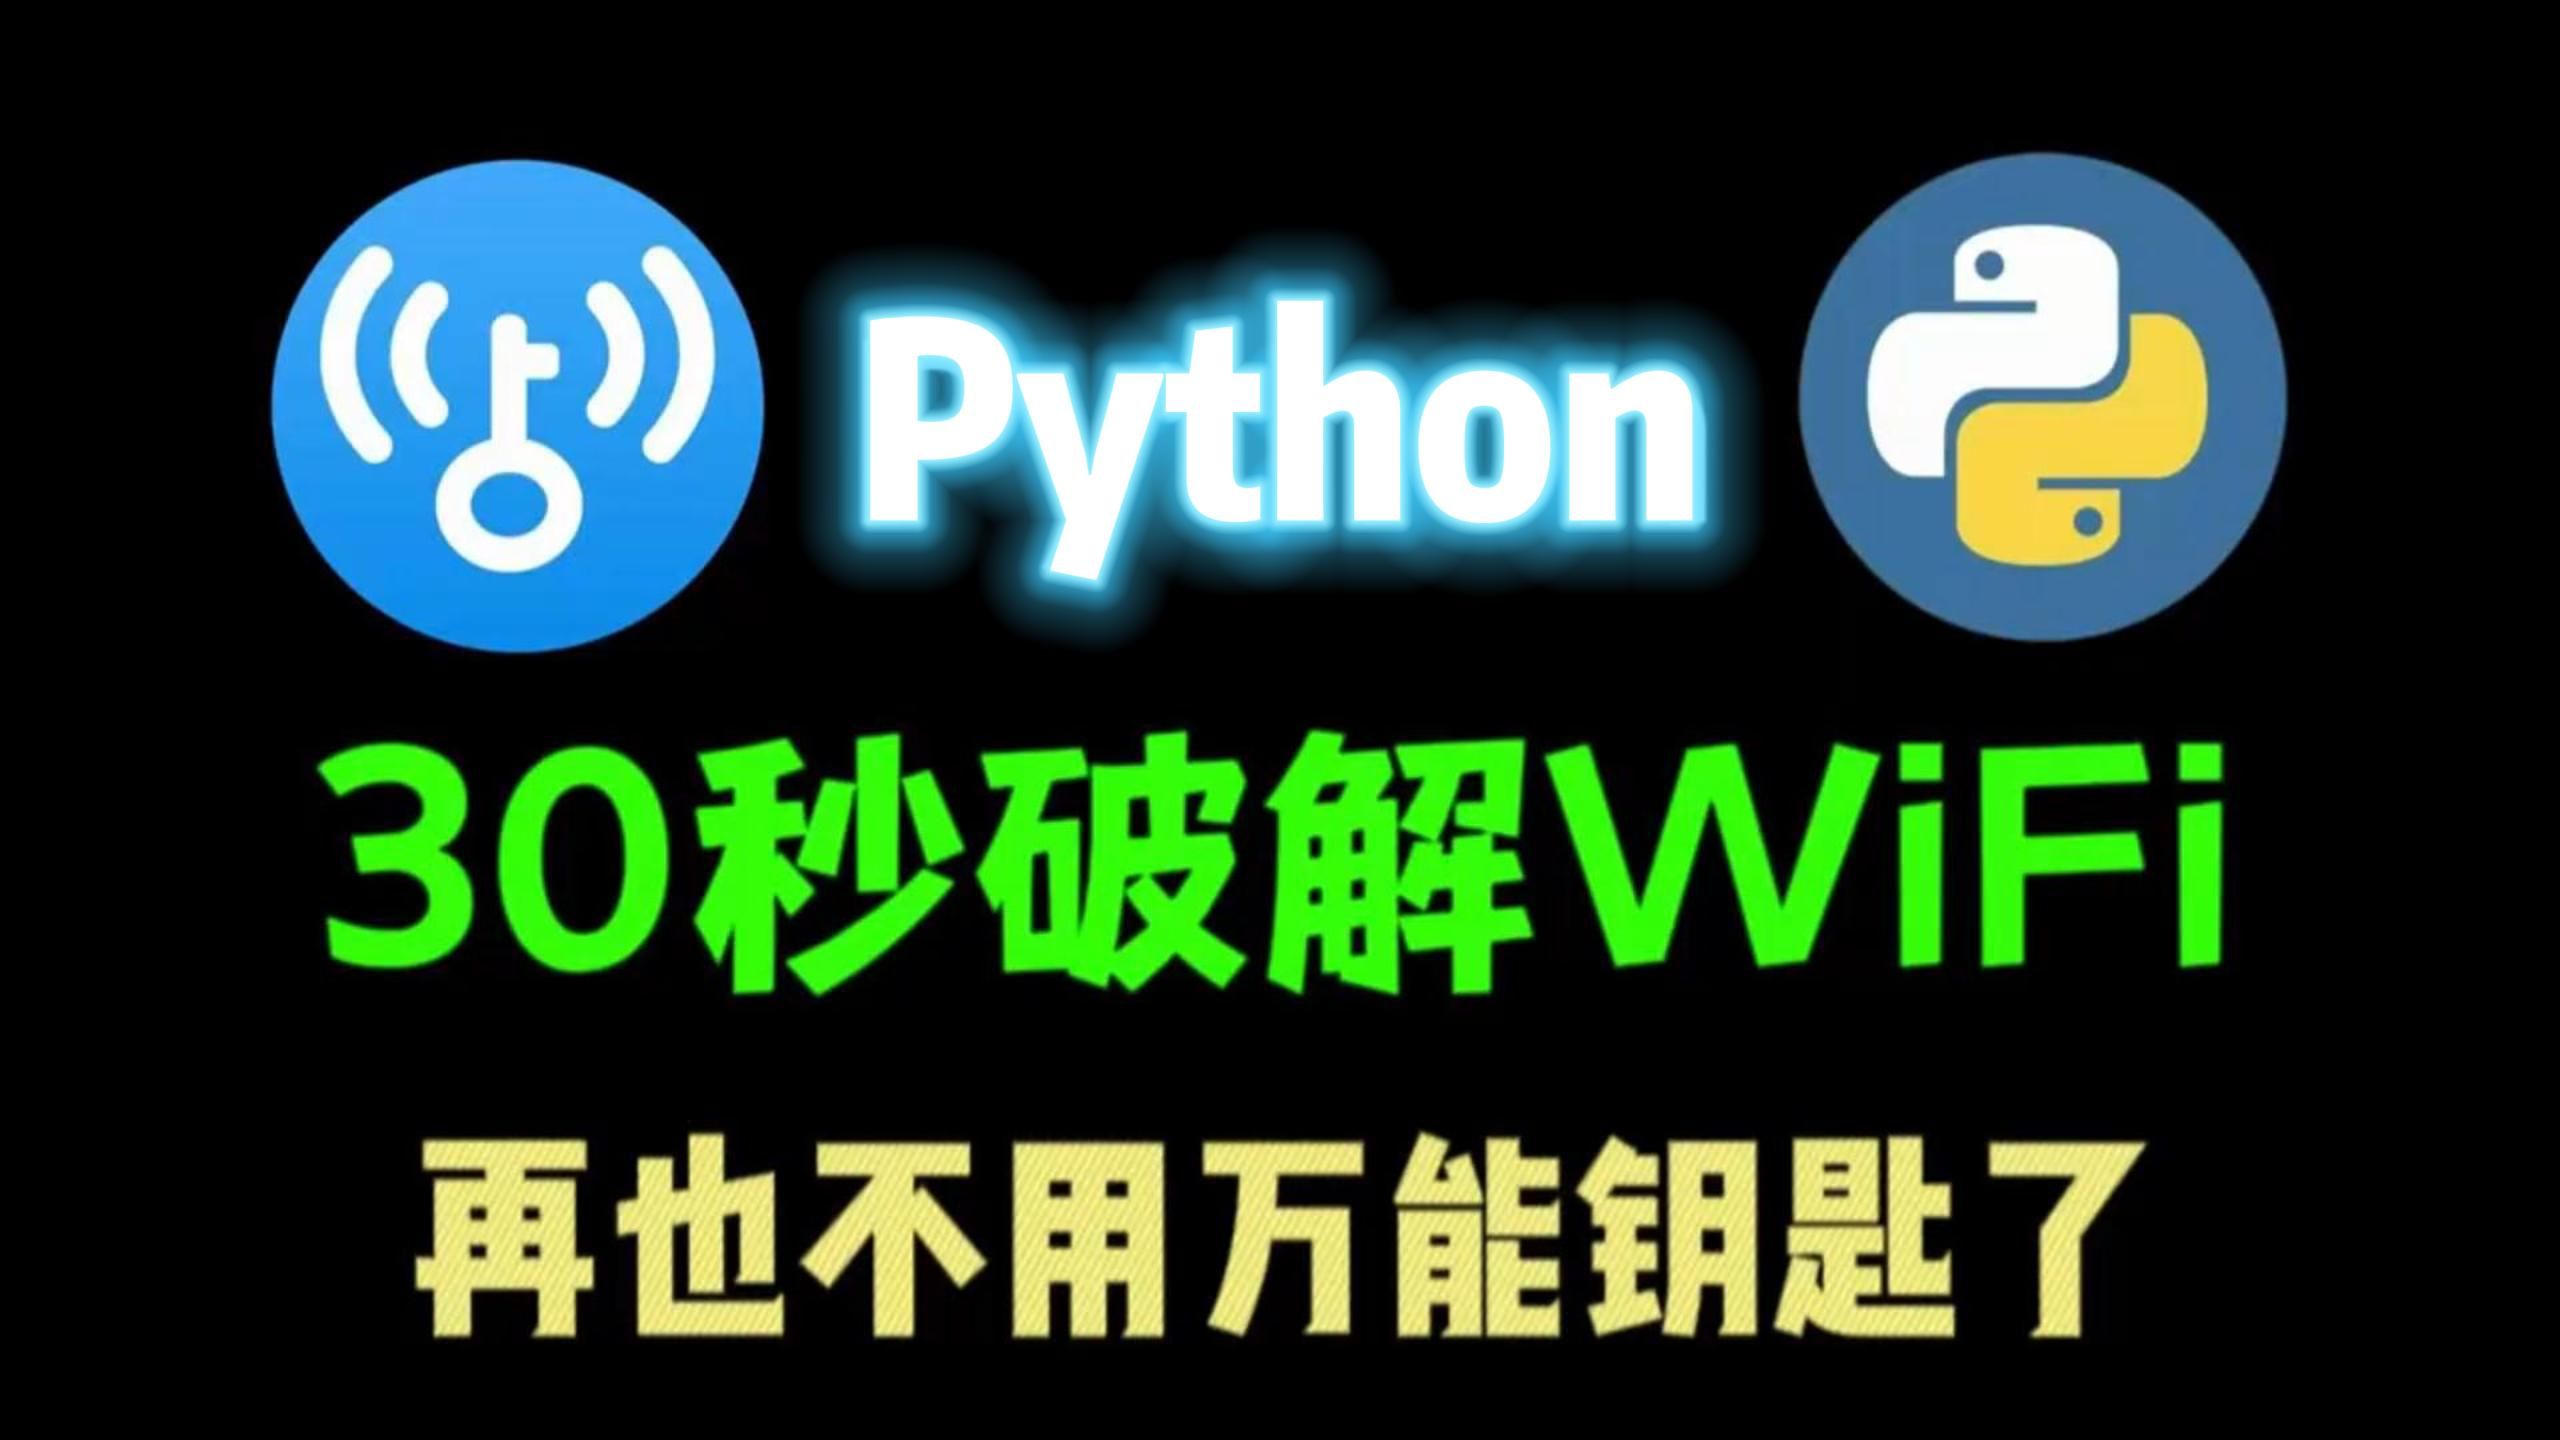 Python几行代码强行破解，WiFi密码伸手就来  十秒一键畅连，堪比Wifi万能钥匙，值得收藏！！！